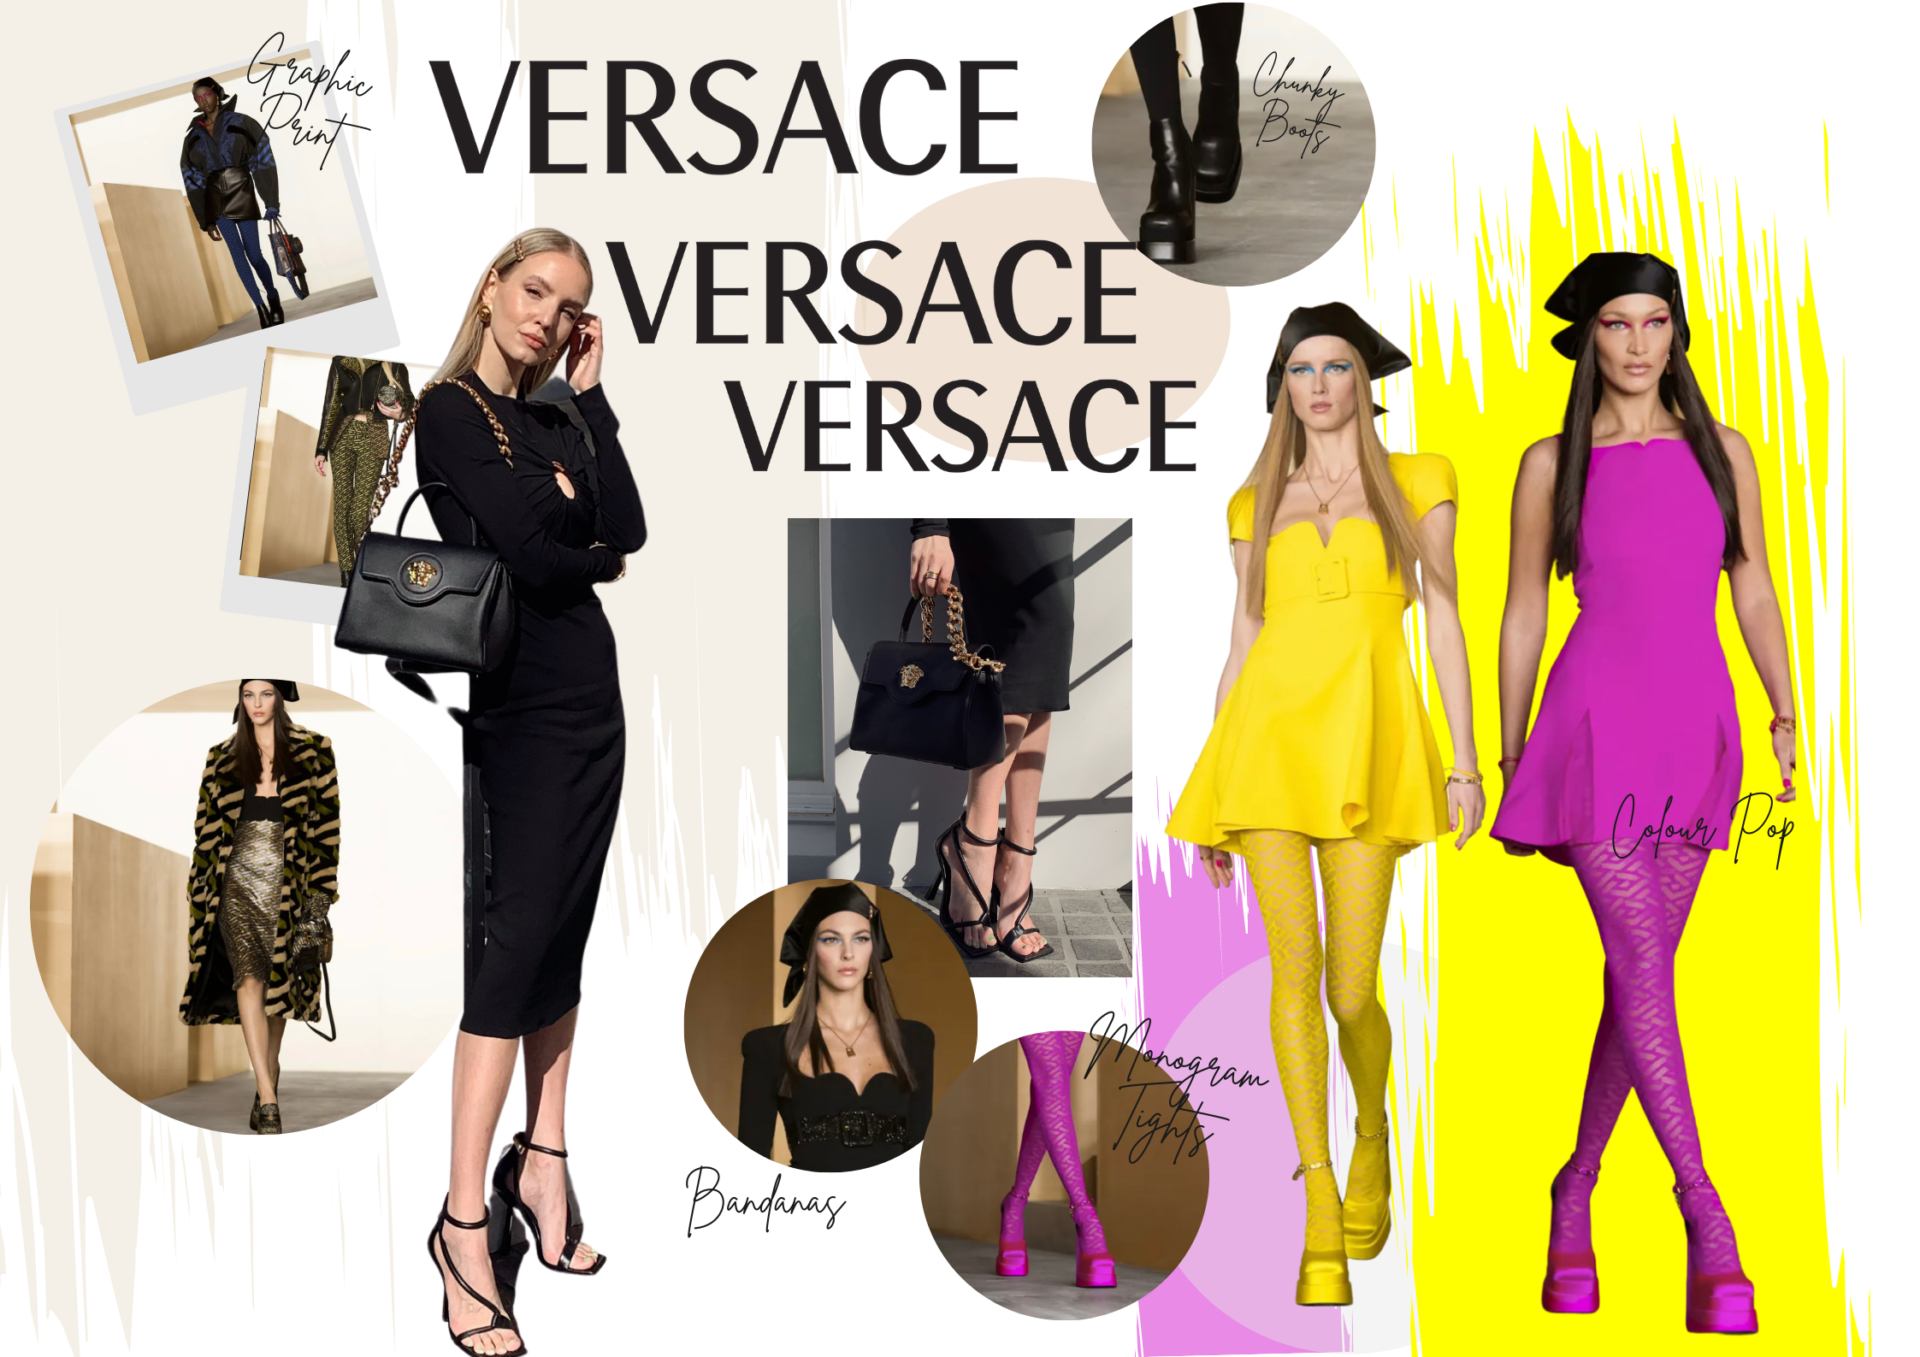 Versace, Versace, Versace. - Leonie Hanne